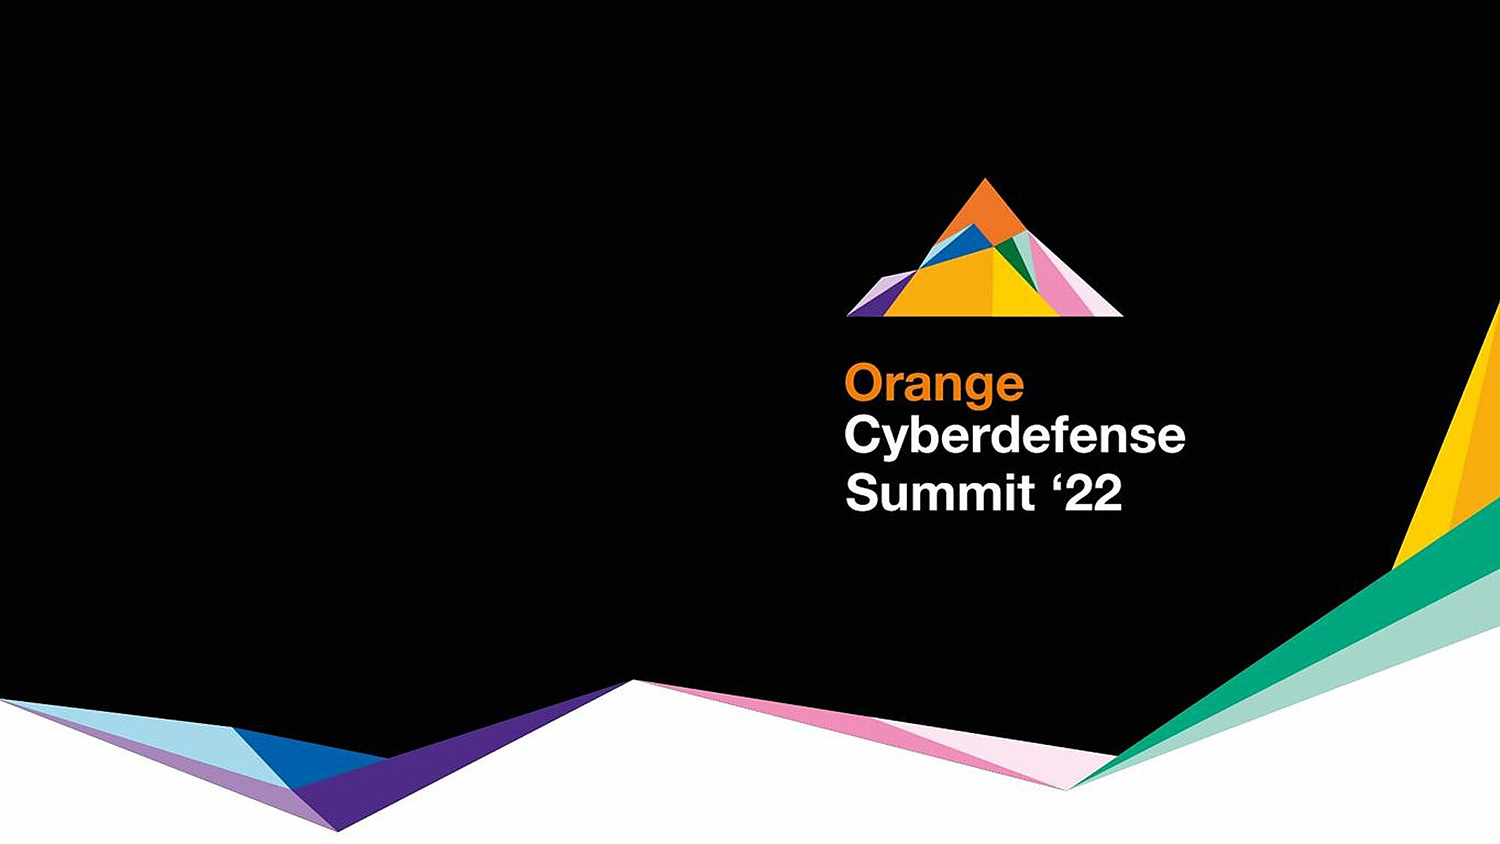 Orange Cyberdefense Summit